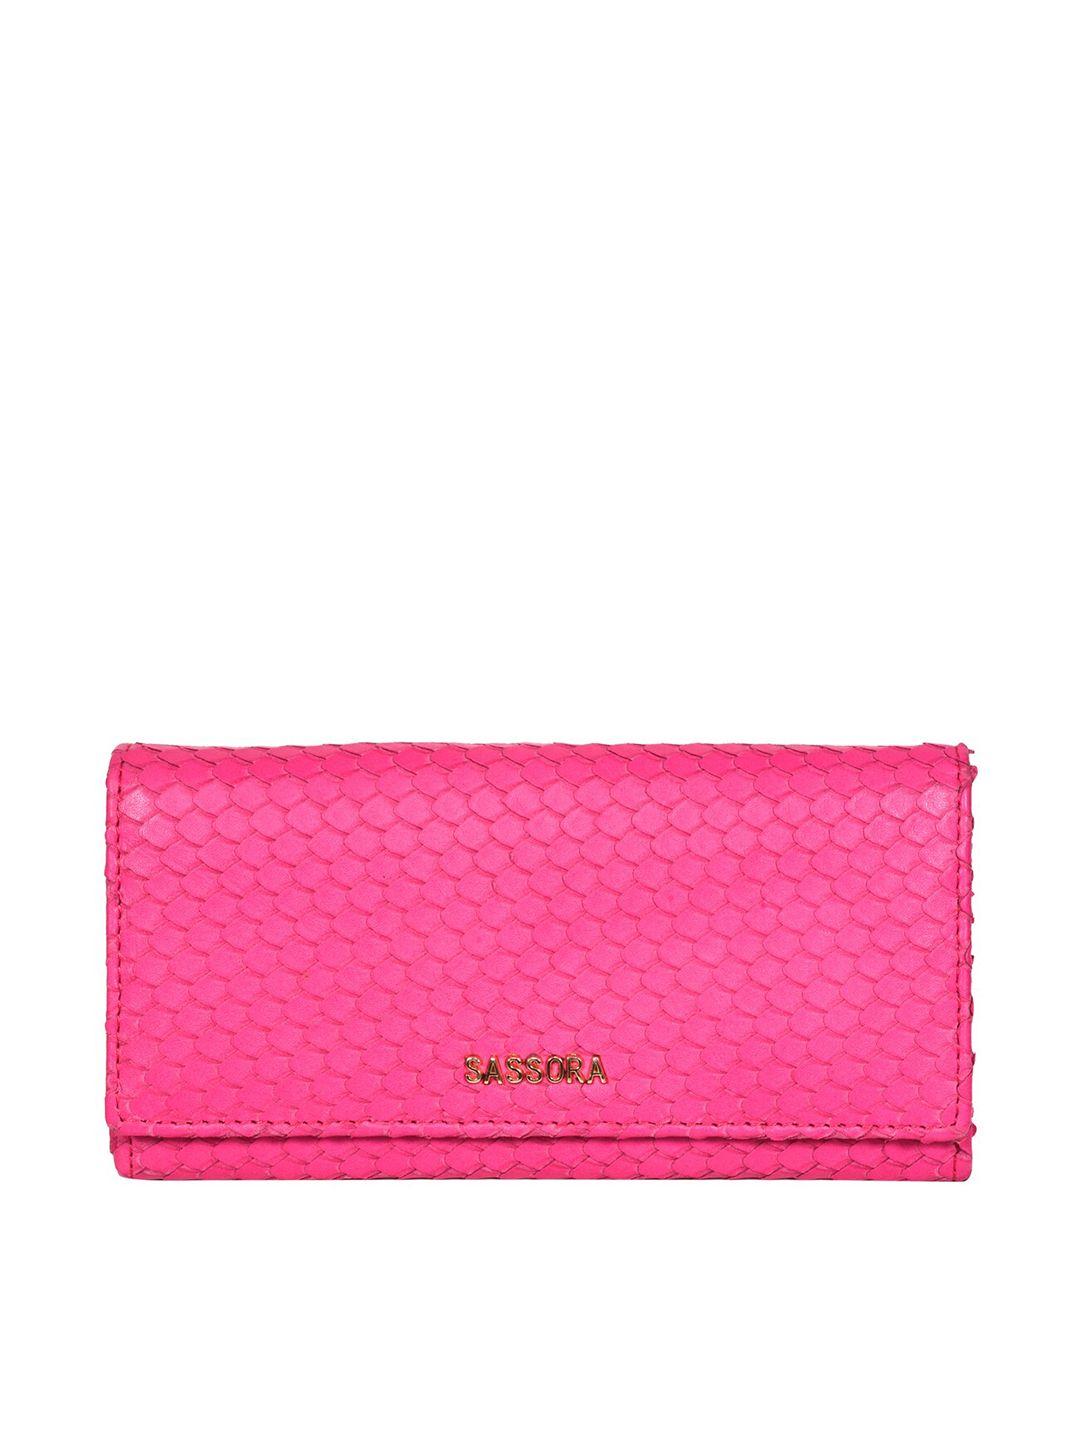 sassora women pink abstract textured leather envelope